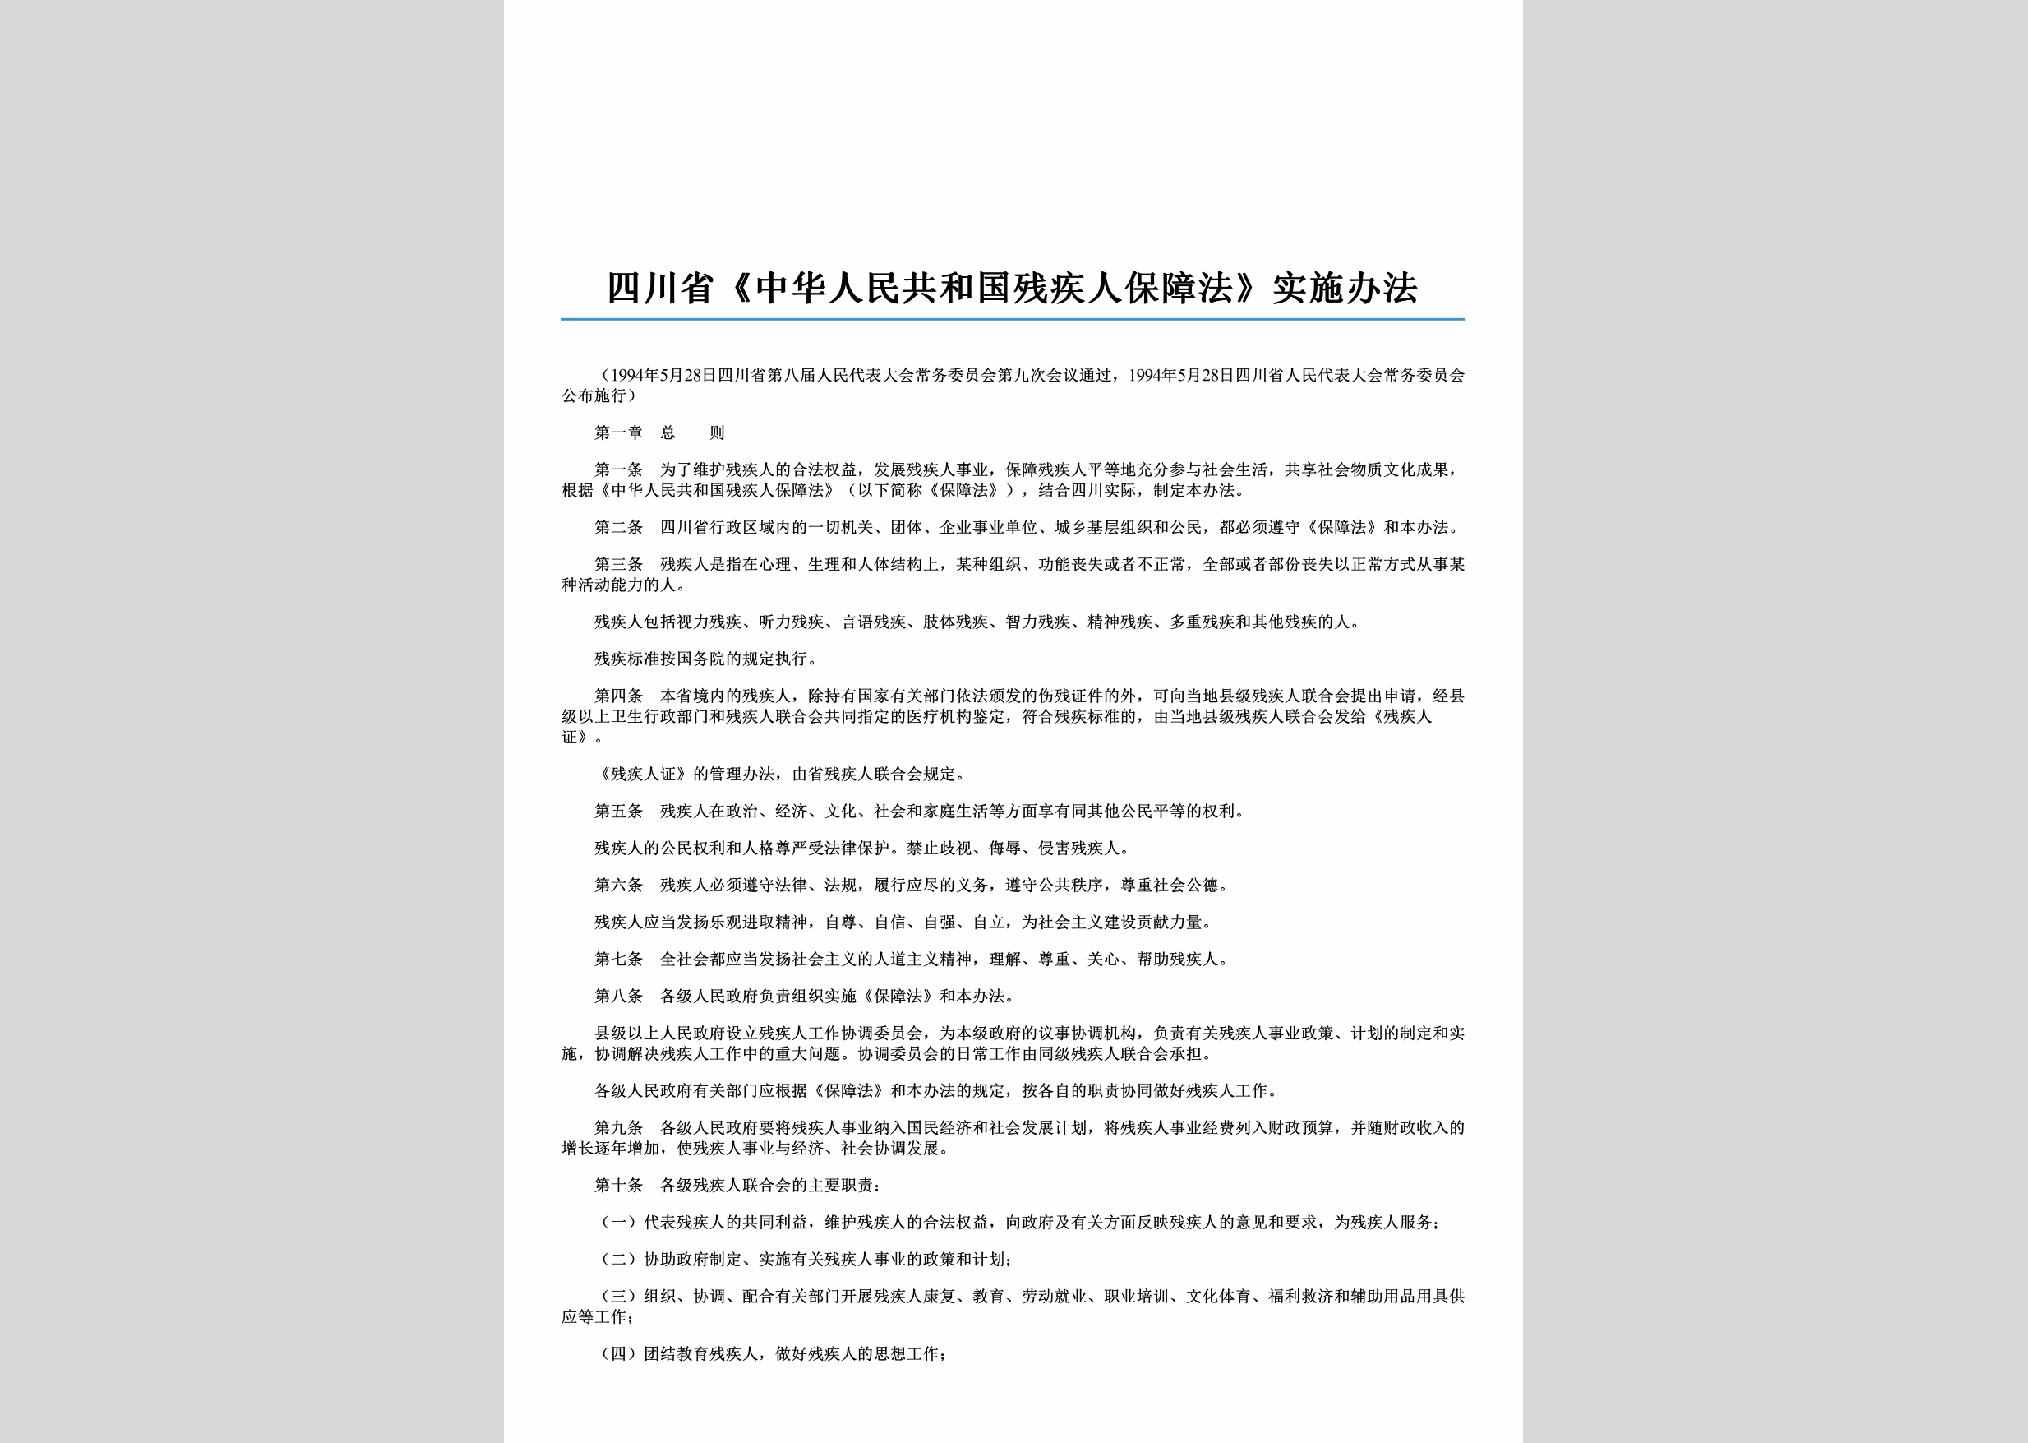 SC-CJRBZSS-2006：四川省《中华人民共和国残疾人保障法》实施办法